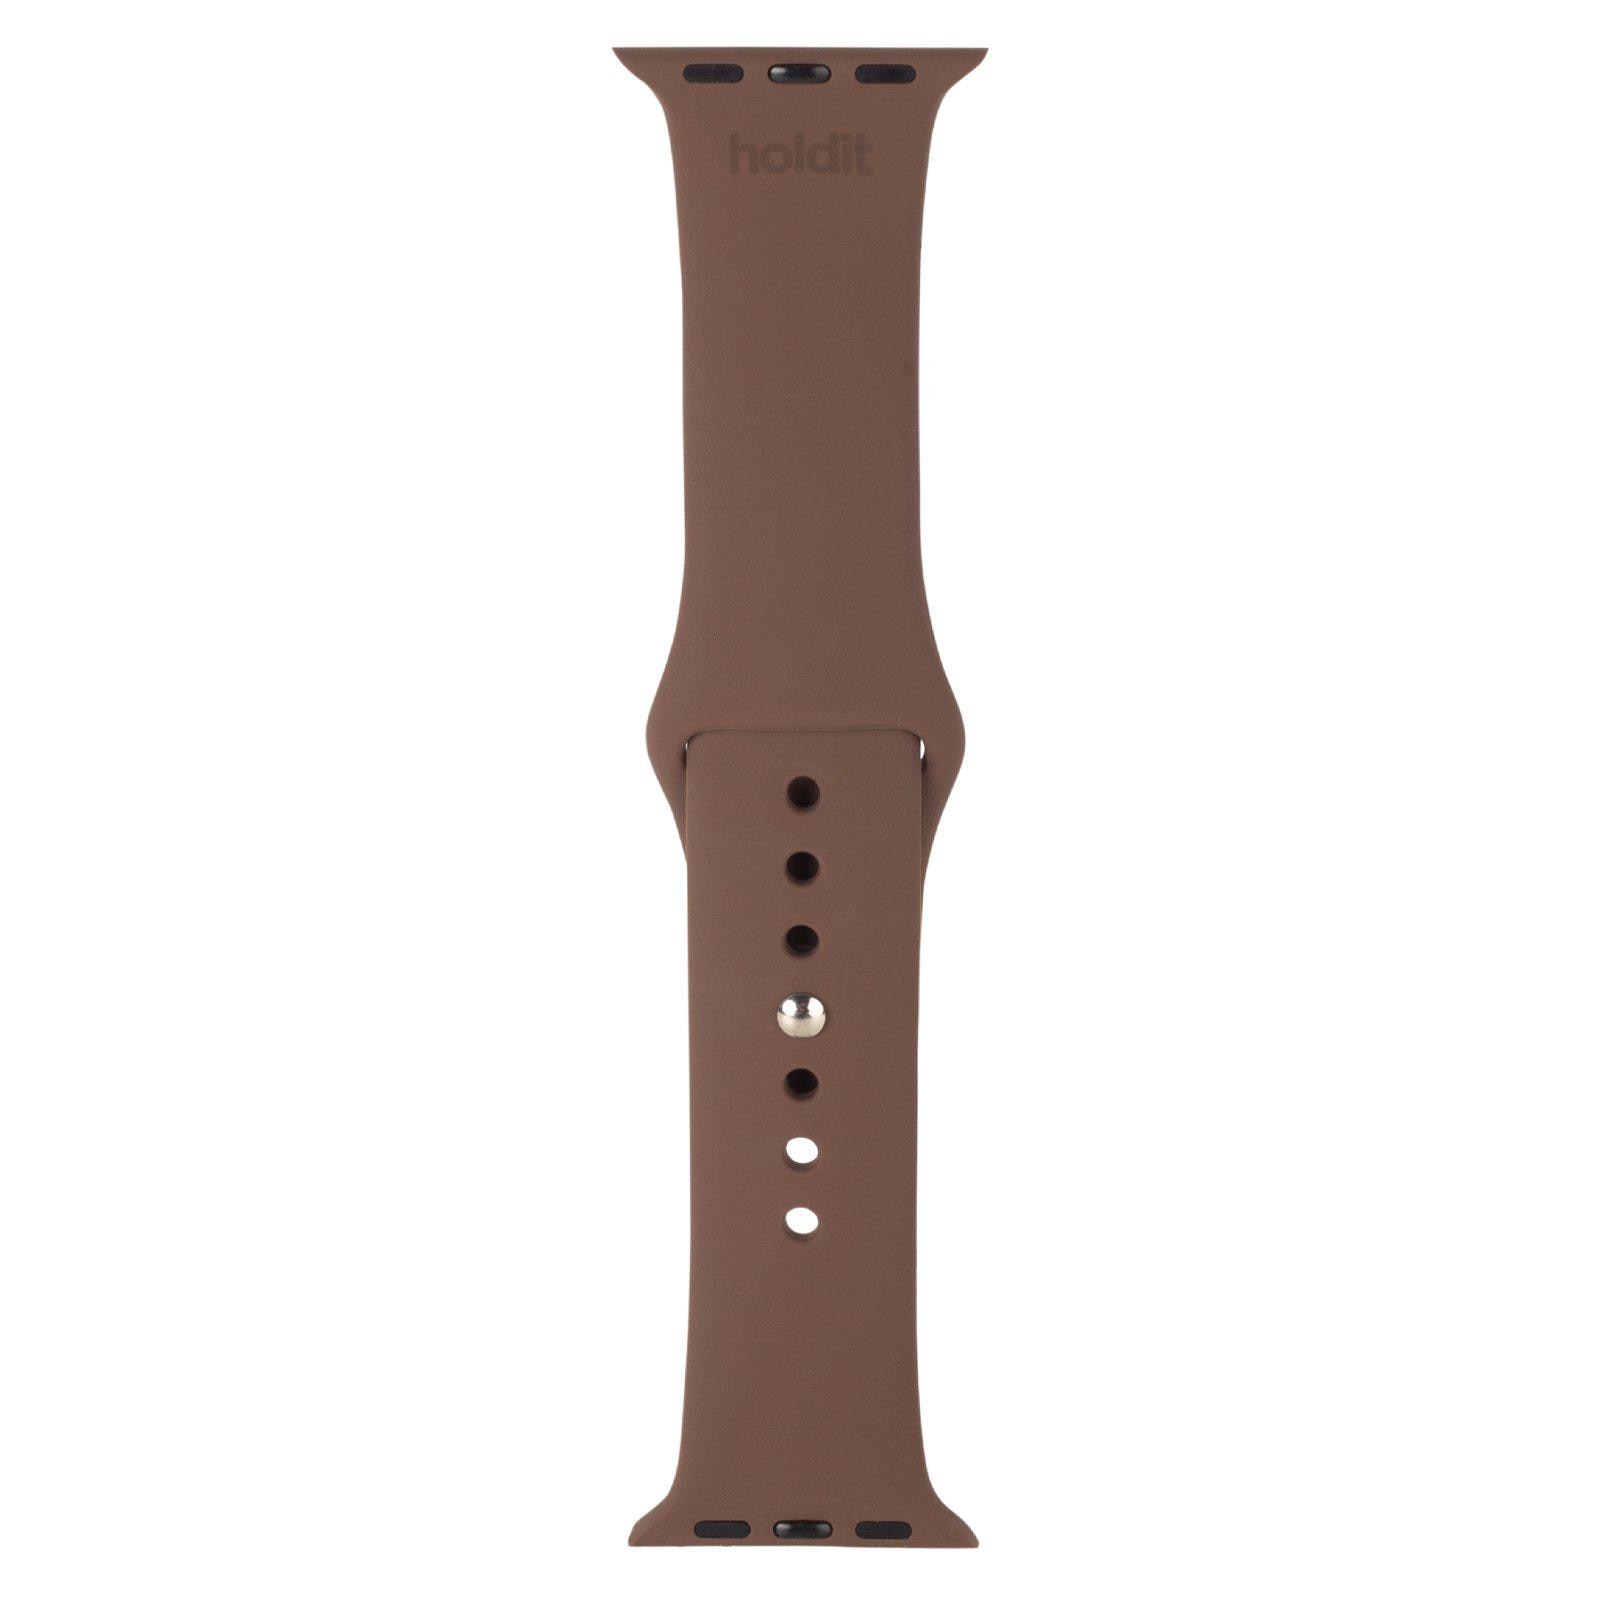 Bracelet en silicone Apple Watch 38mm, Dark Brown